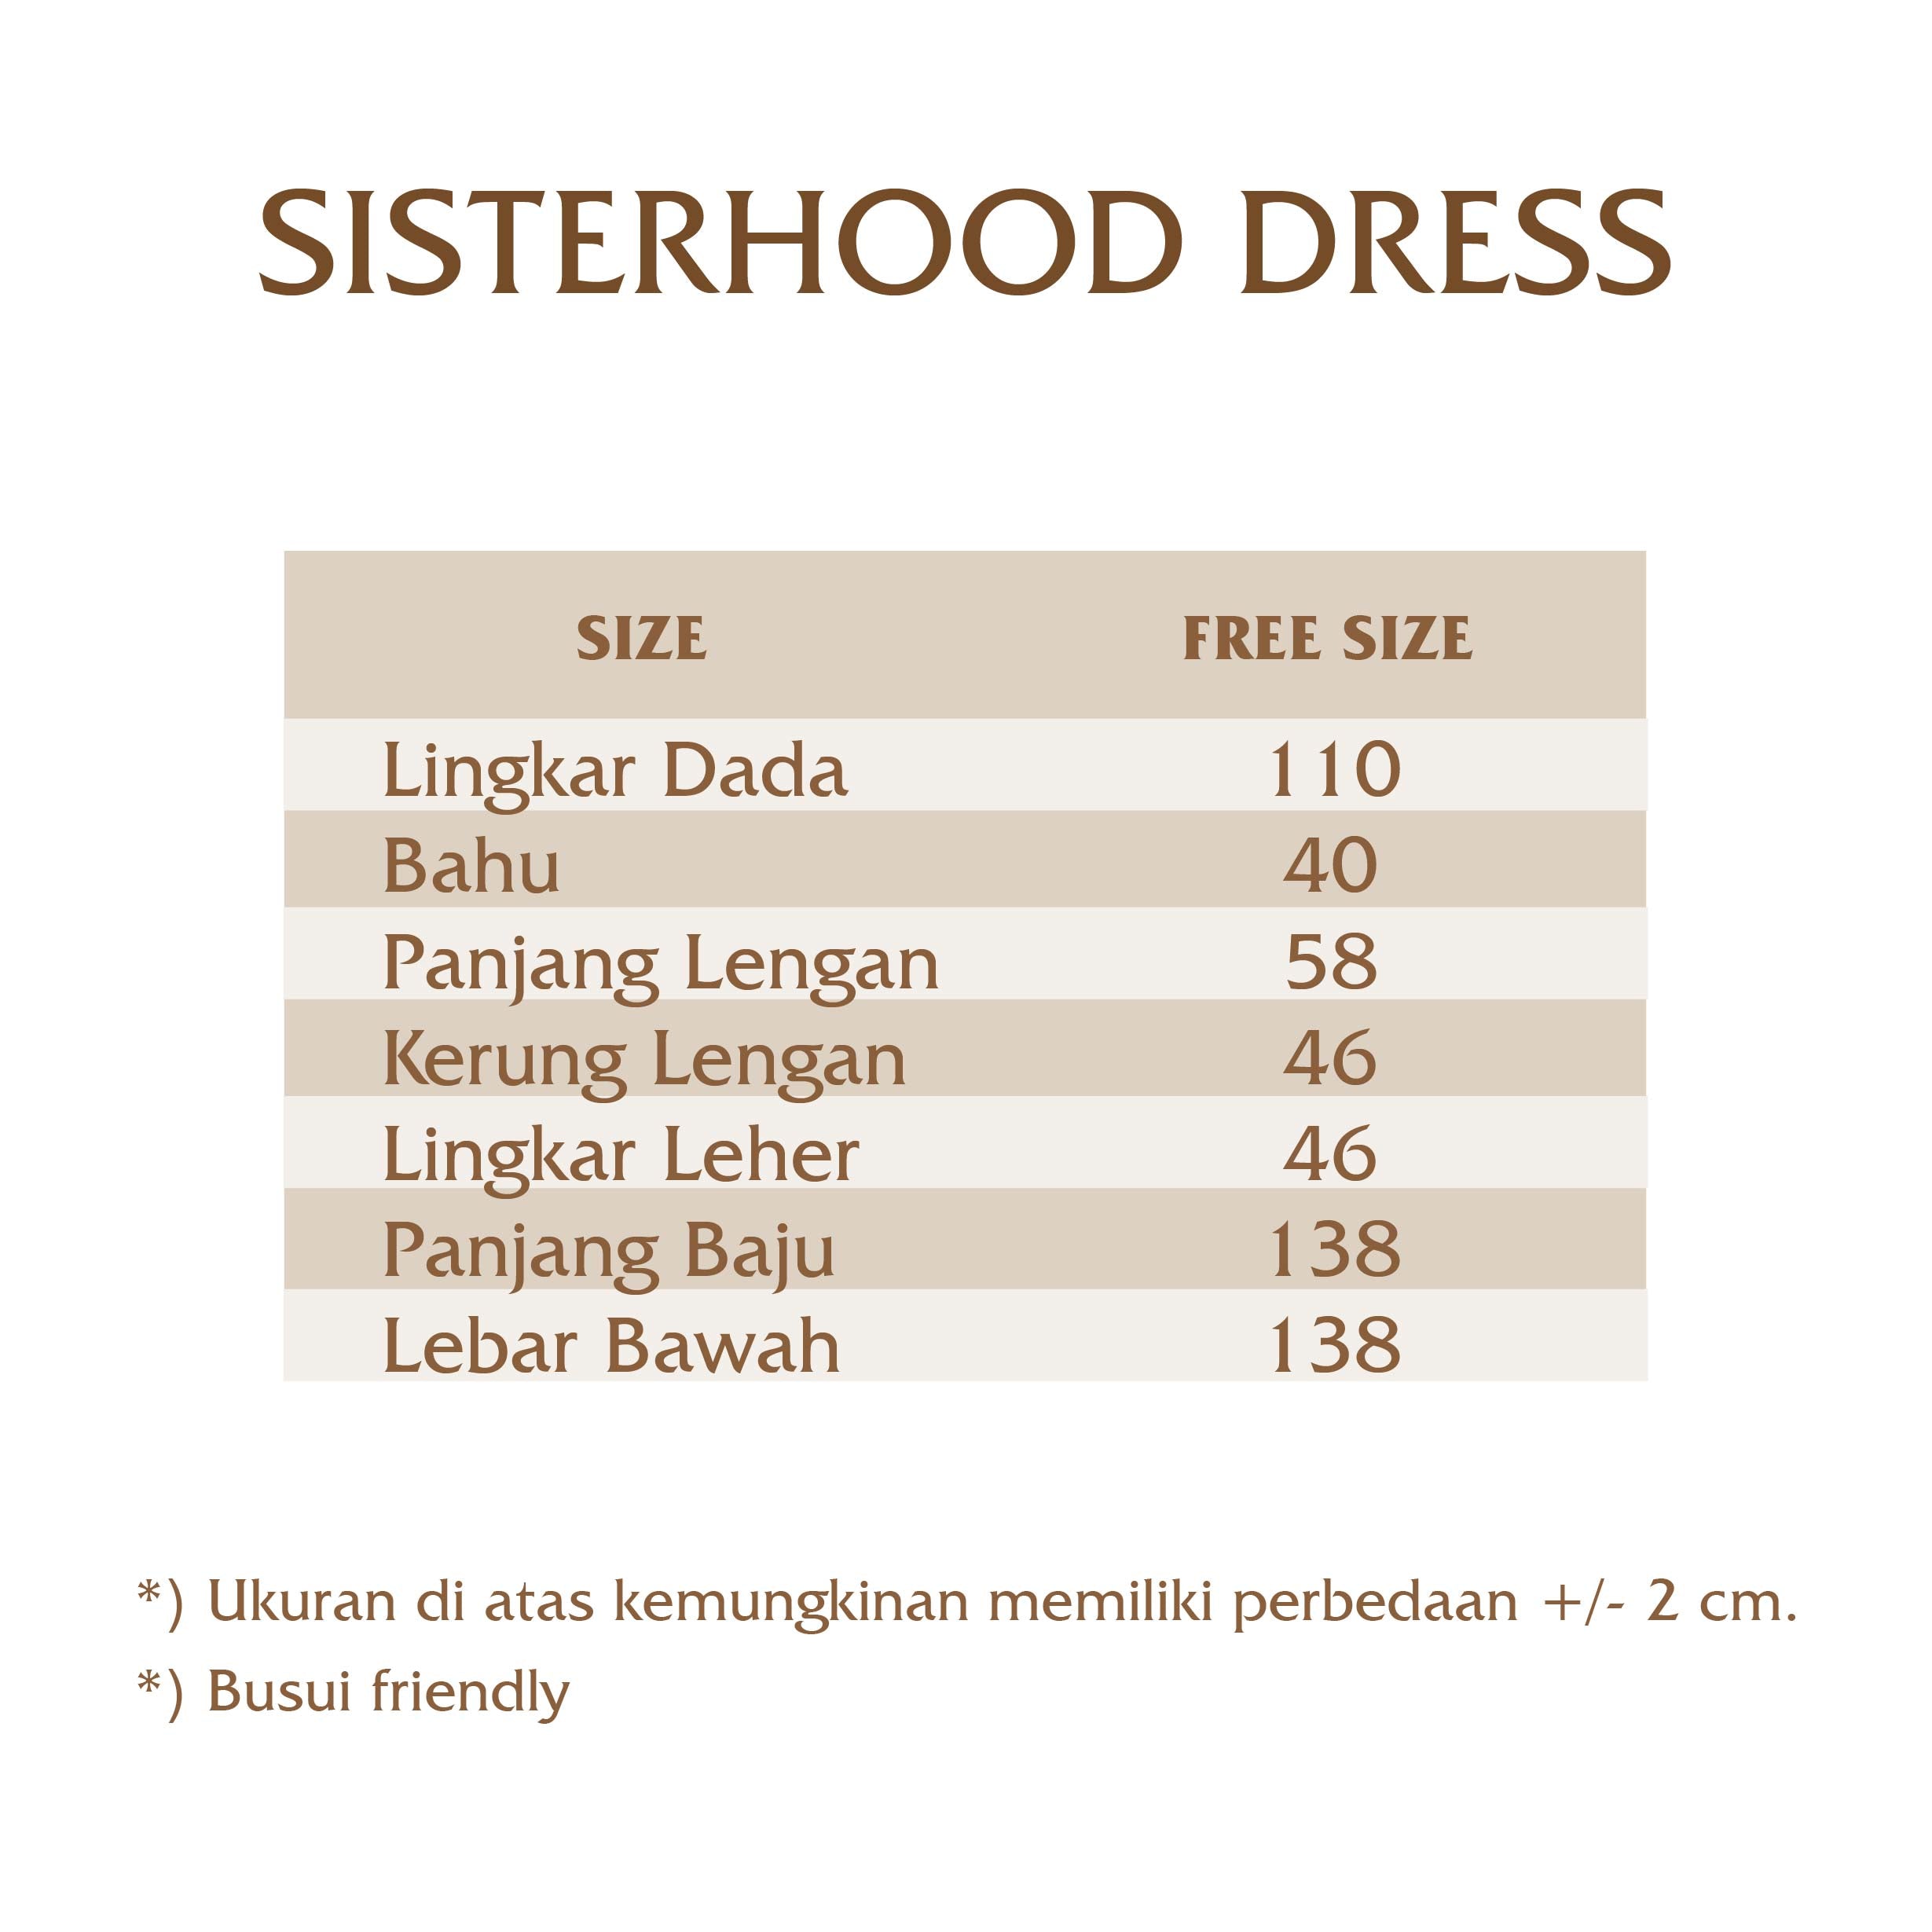 Sisterhood Dress